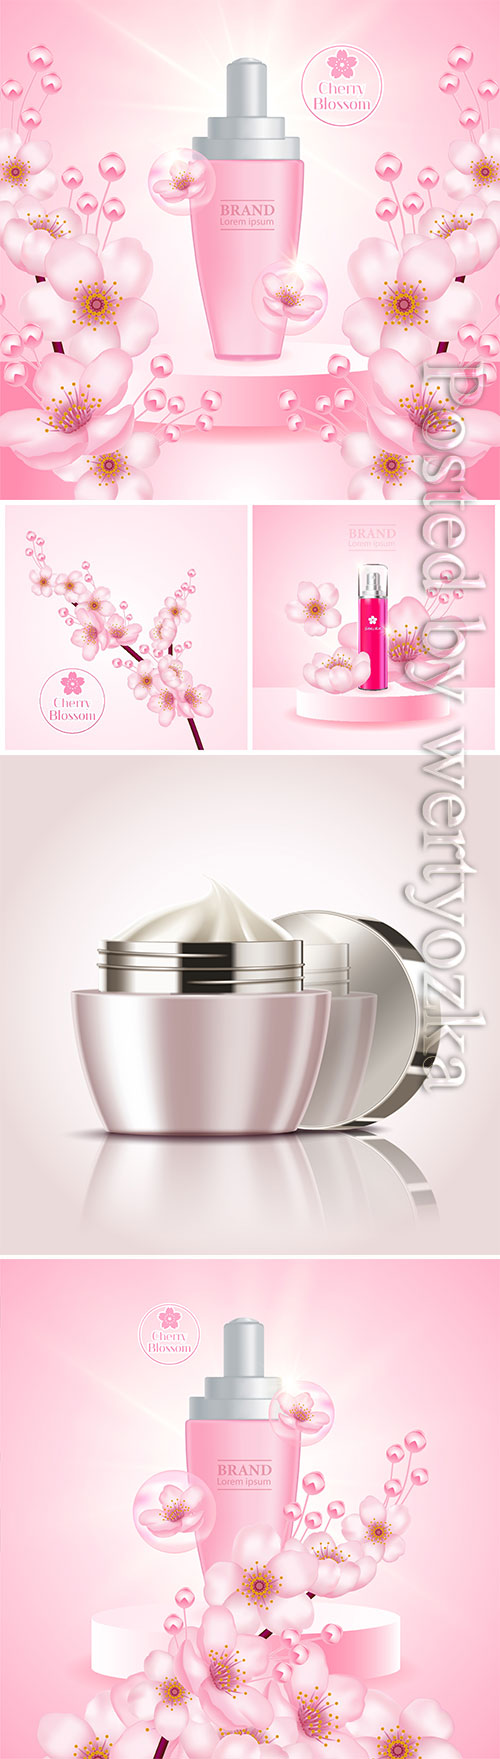 Cherry blossom cream serum product illustration